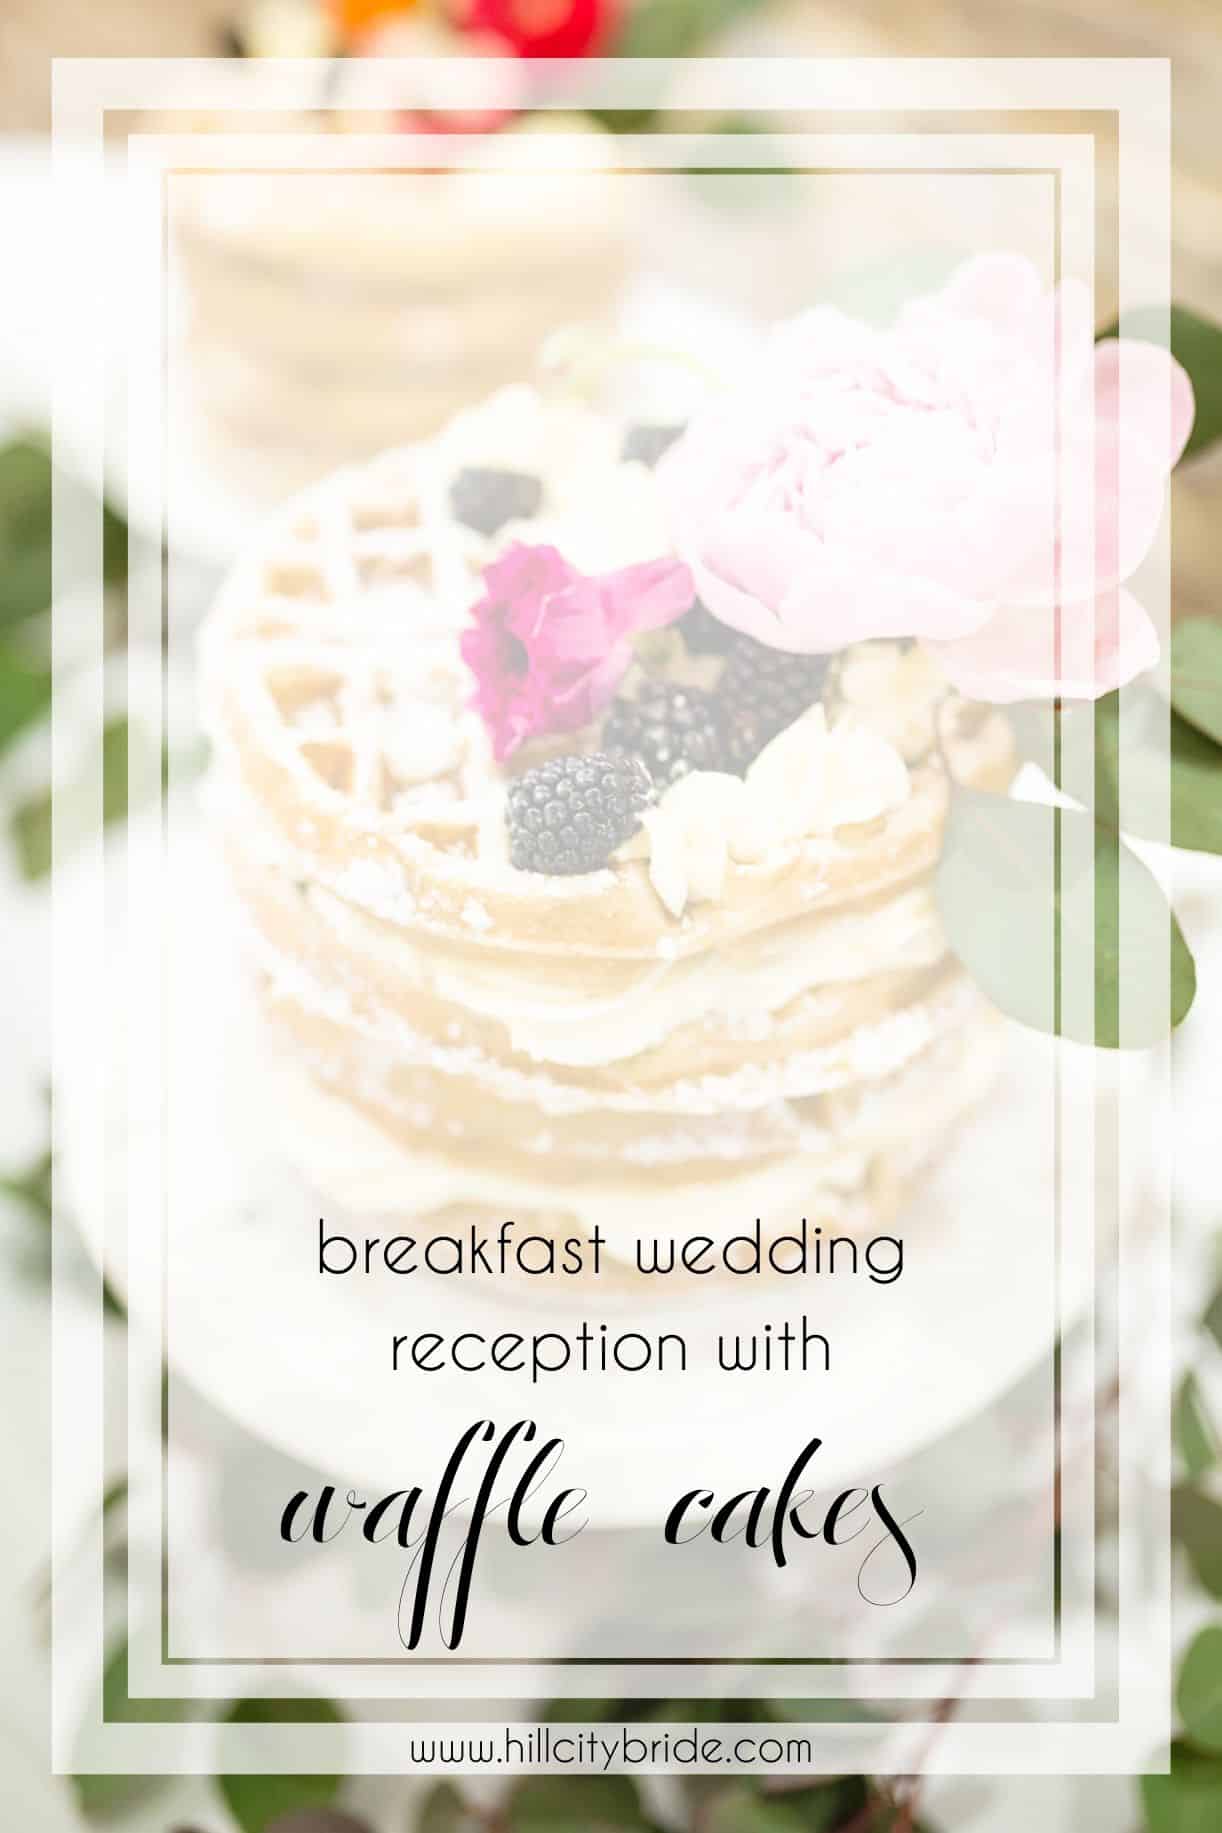 Fredericksburg Virginia Breakfast Wedding Reception with Beautiful Belgian Waffle Cakes | Hill City Bride Virginia Wedding Blog